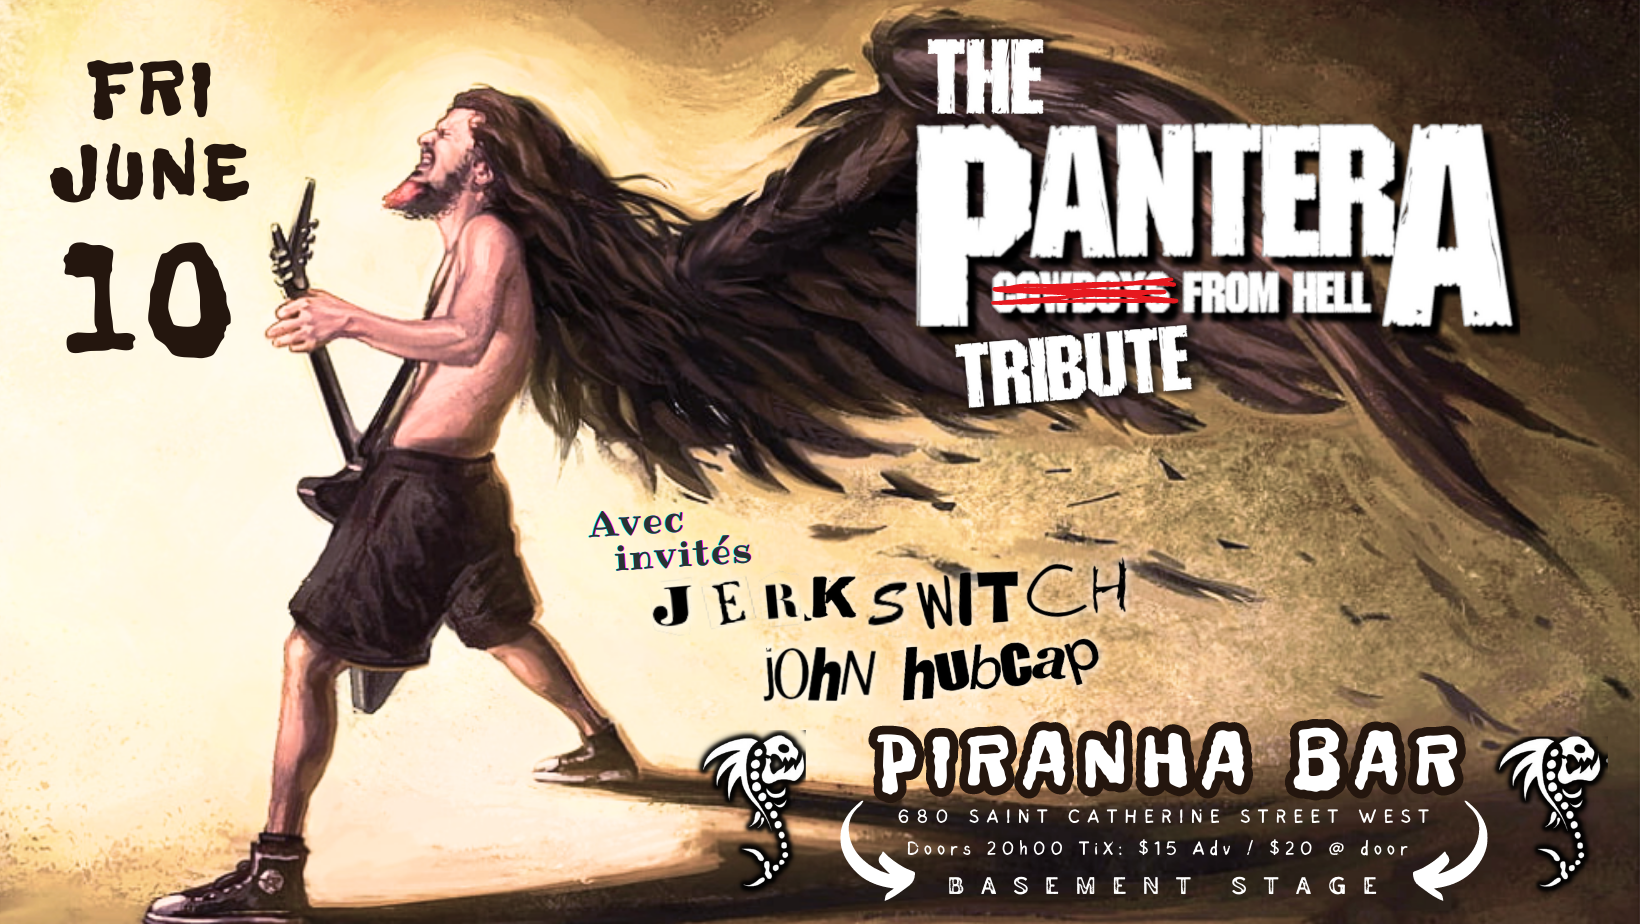 The Pantera Tribute